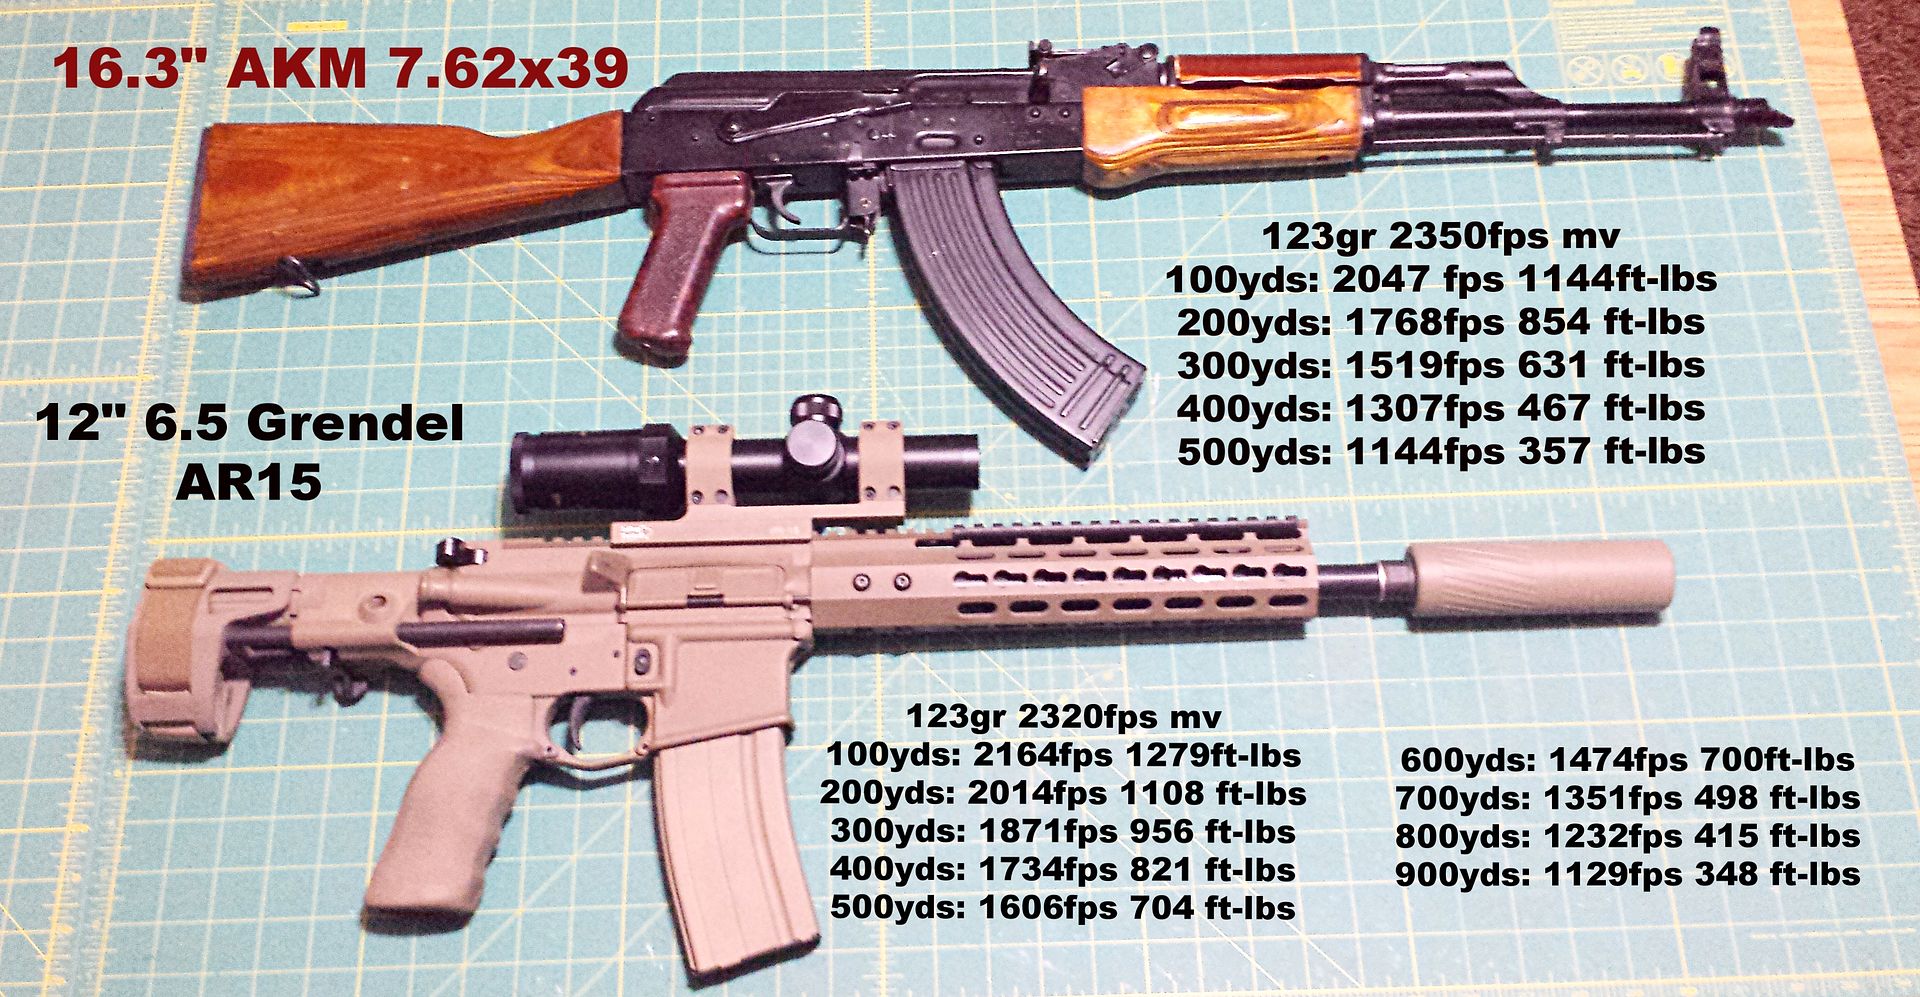 7.62x39 AKM vs 12" 6.5 Grendel Ballistics